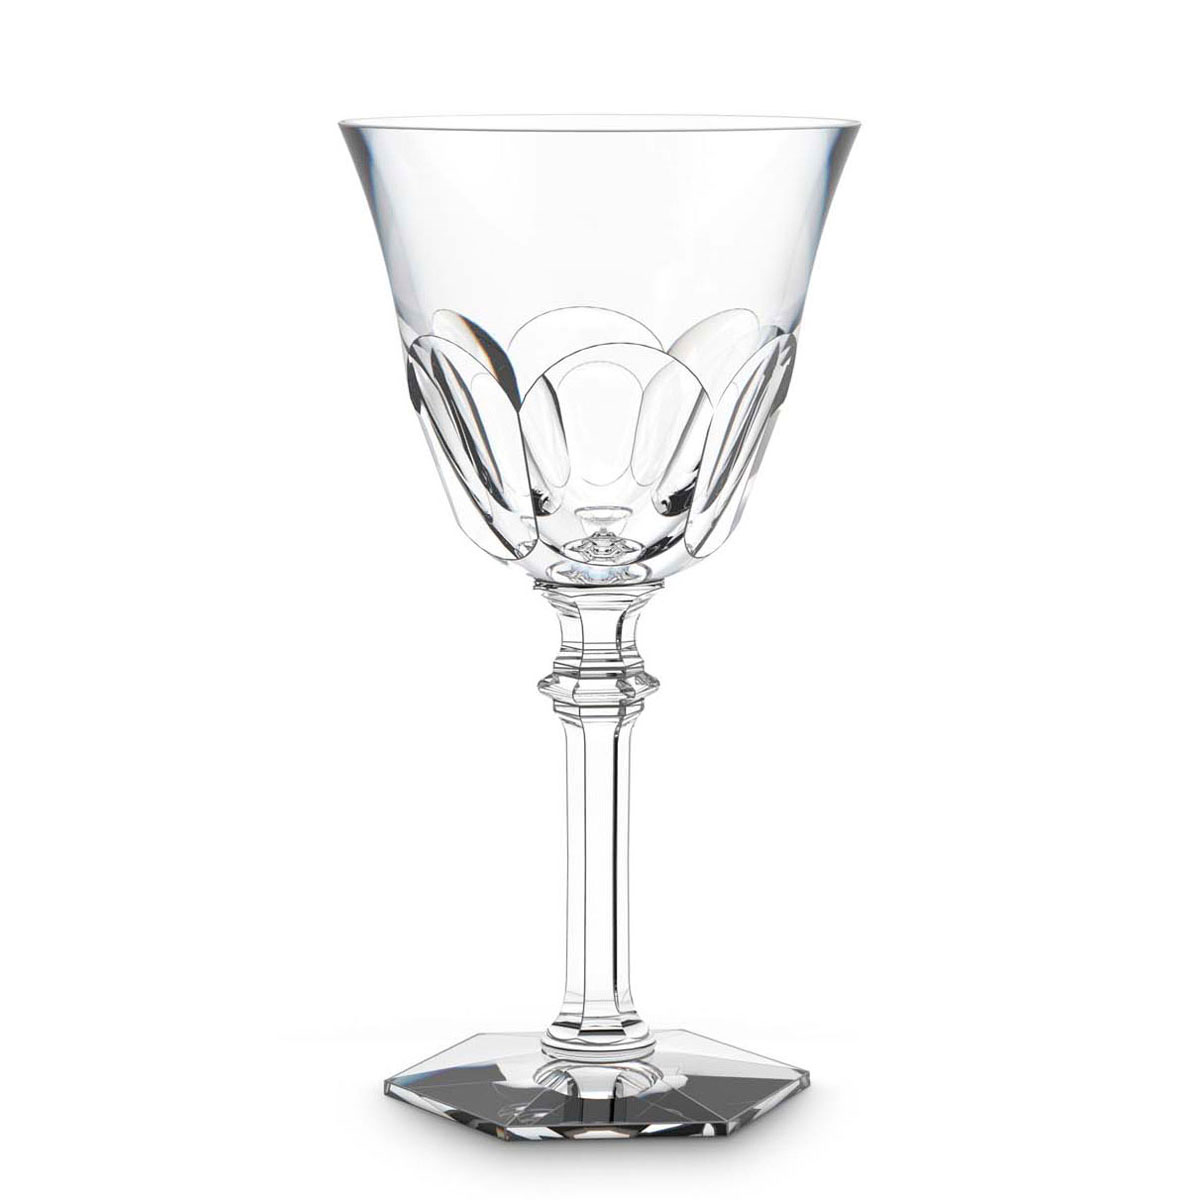 Baccarat Harcourt Eve Euro White Wine Glass, Single